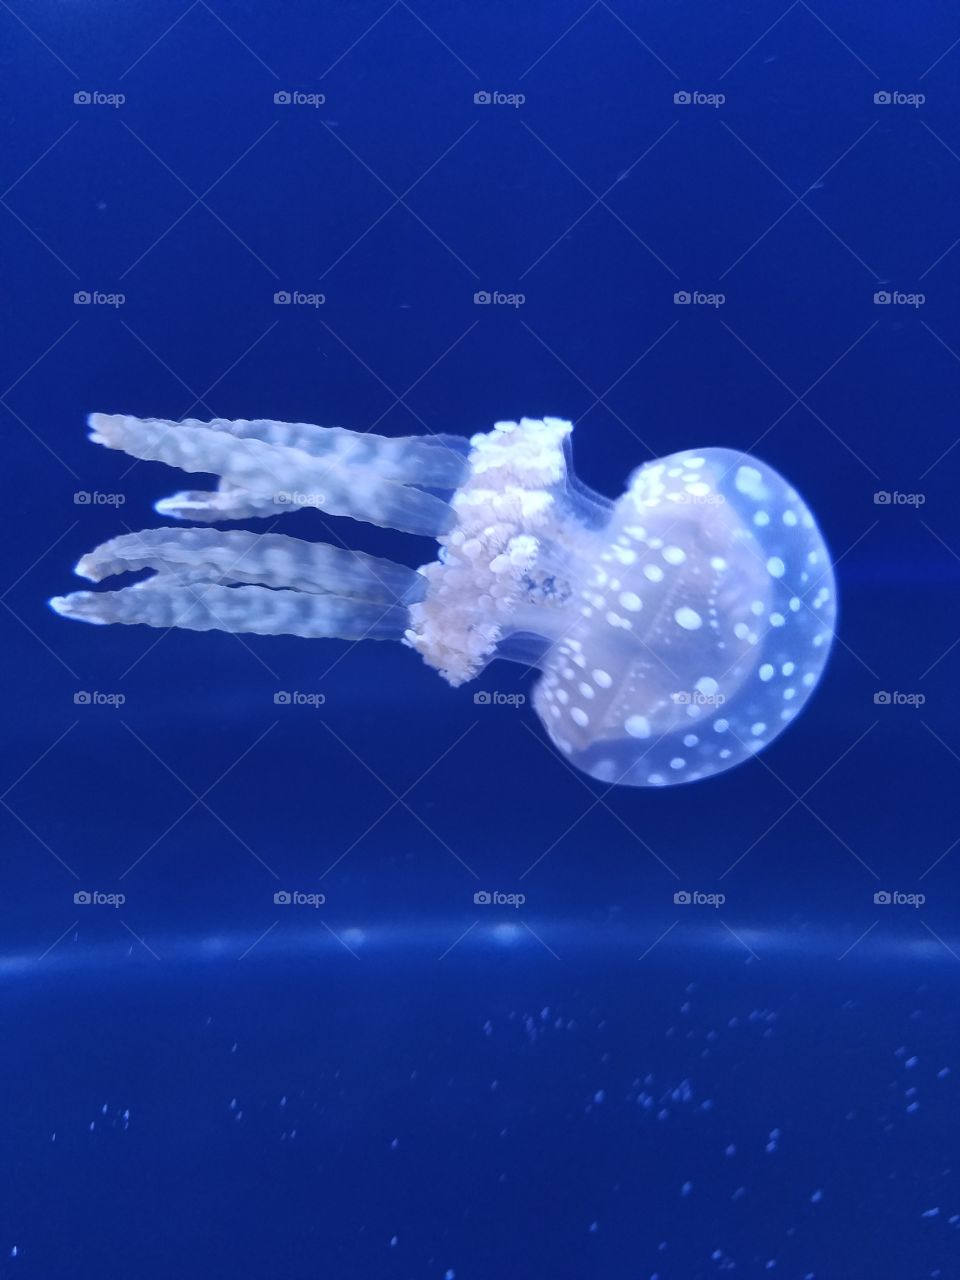 spotted jellyfish in dark blue water